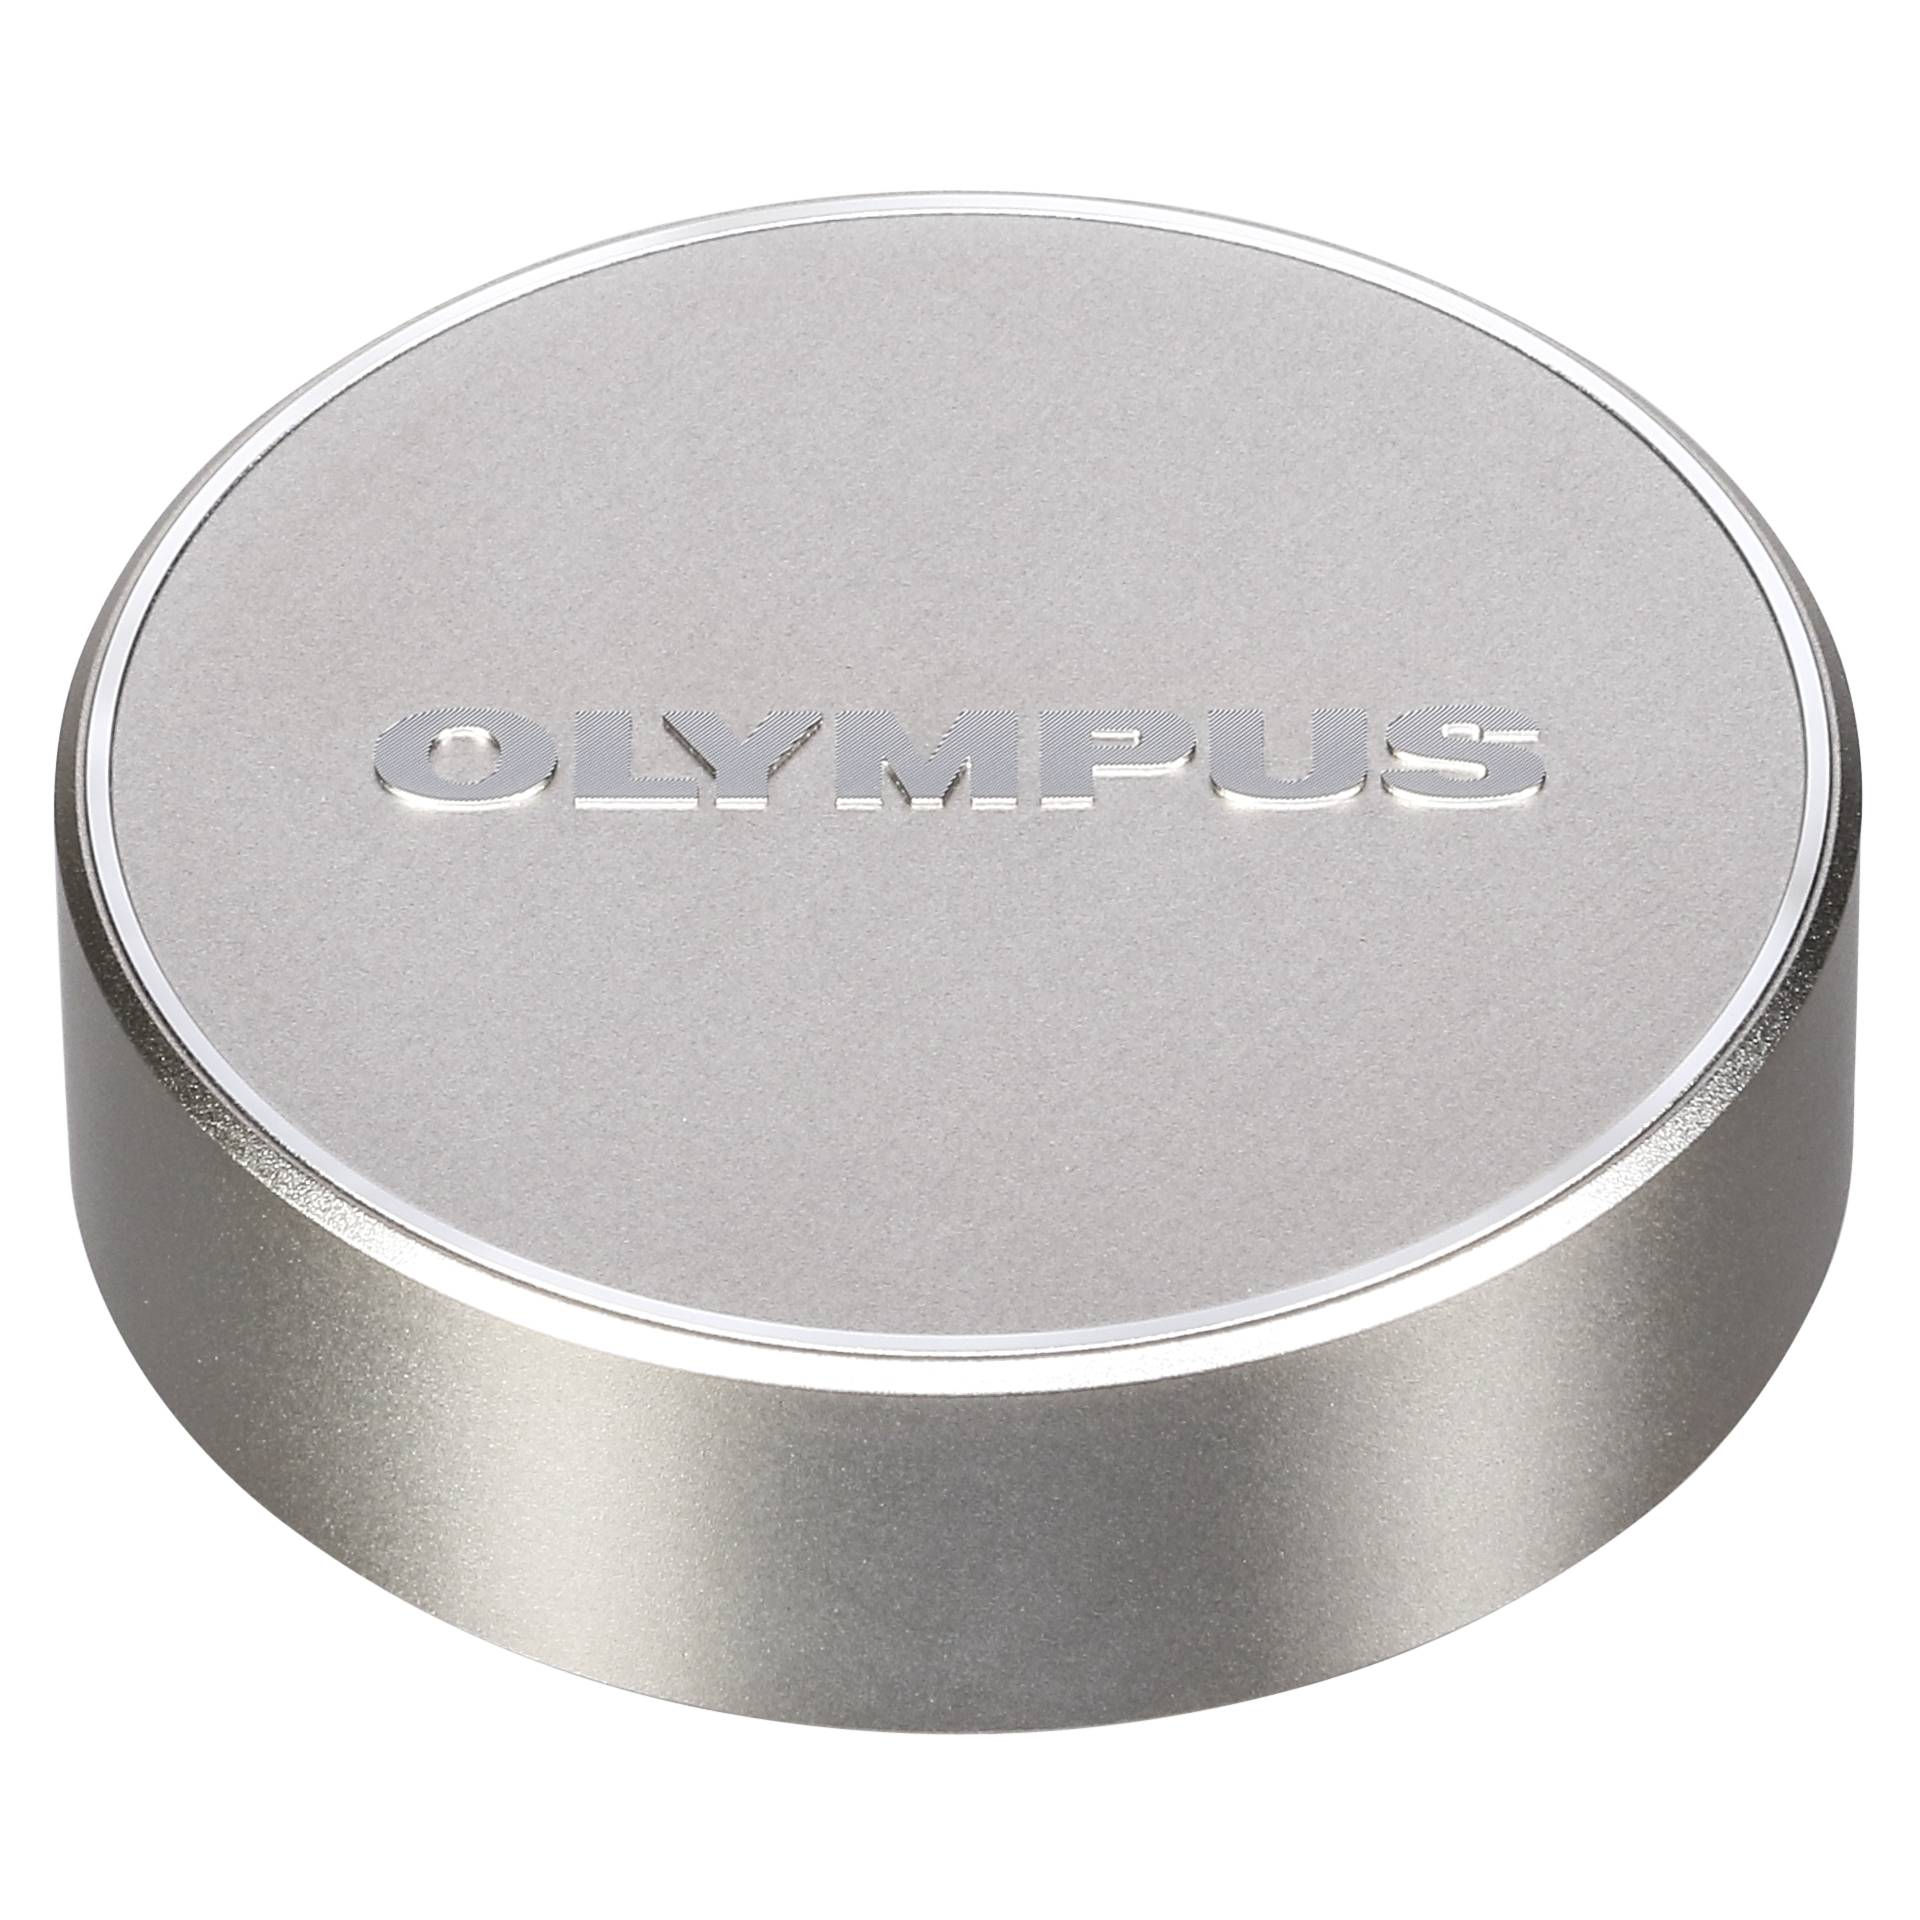 Olympus LC-61 Objektivdeckel für M7518 silber Metall